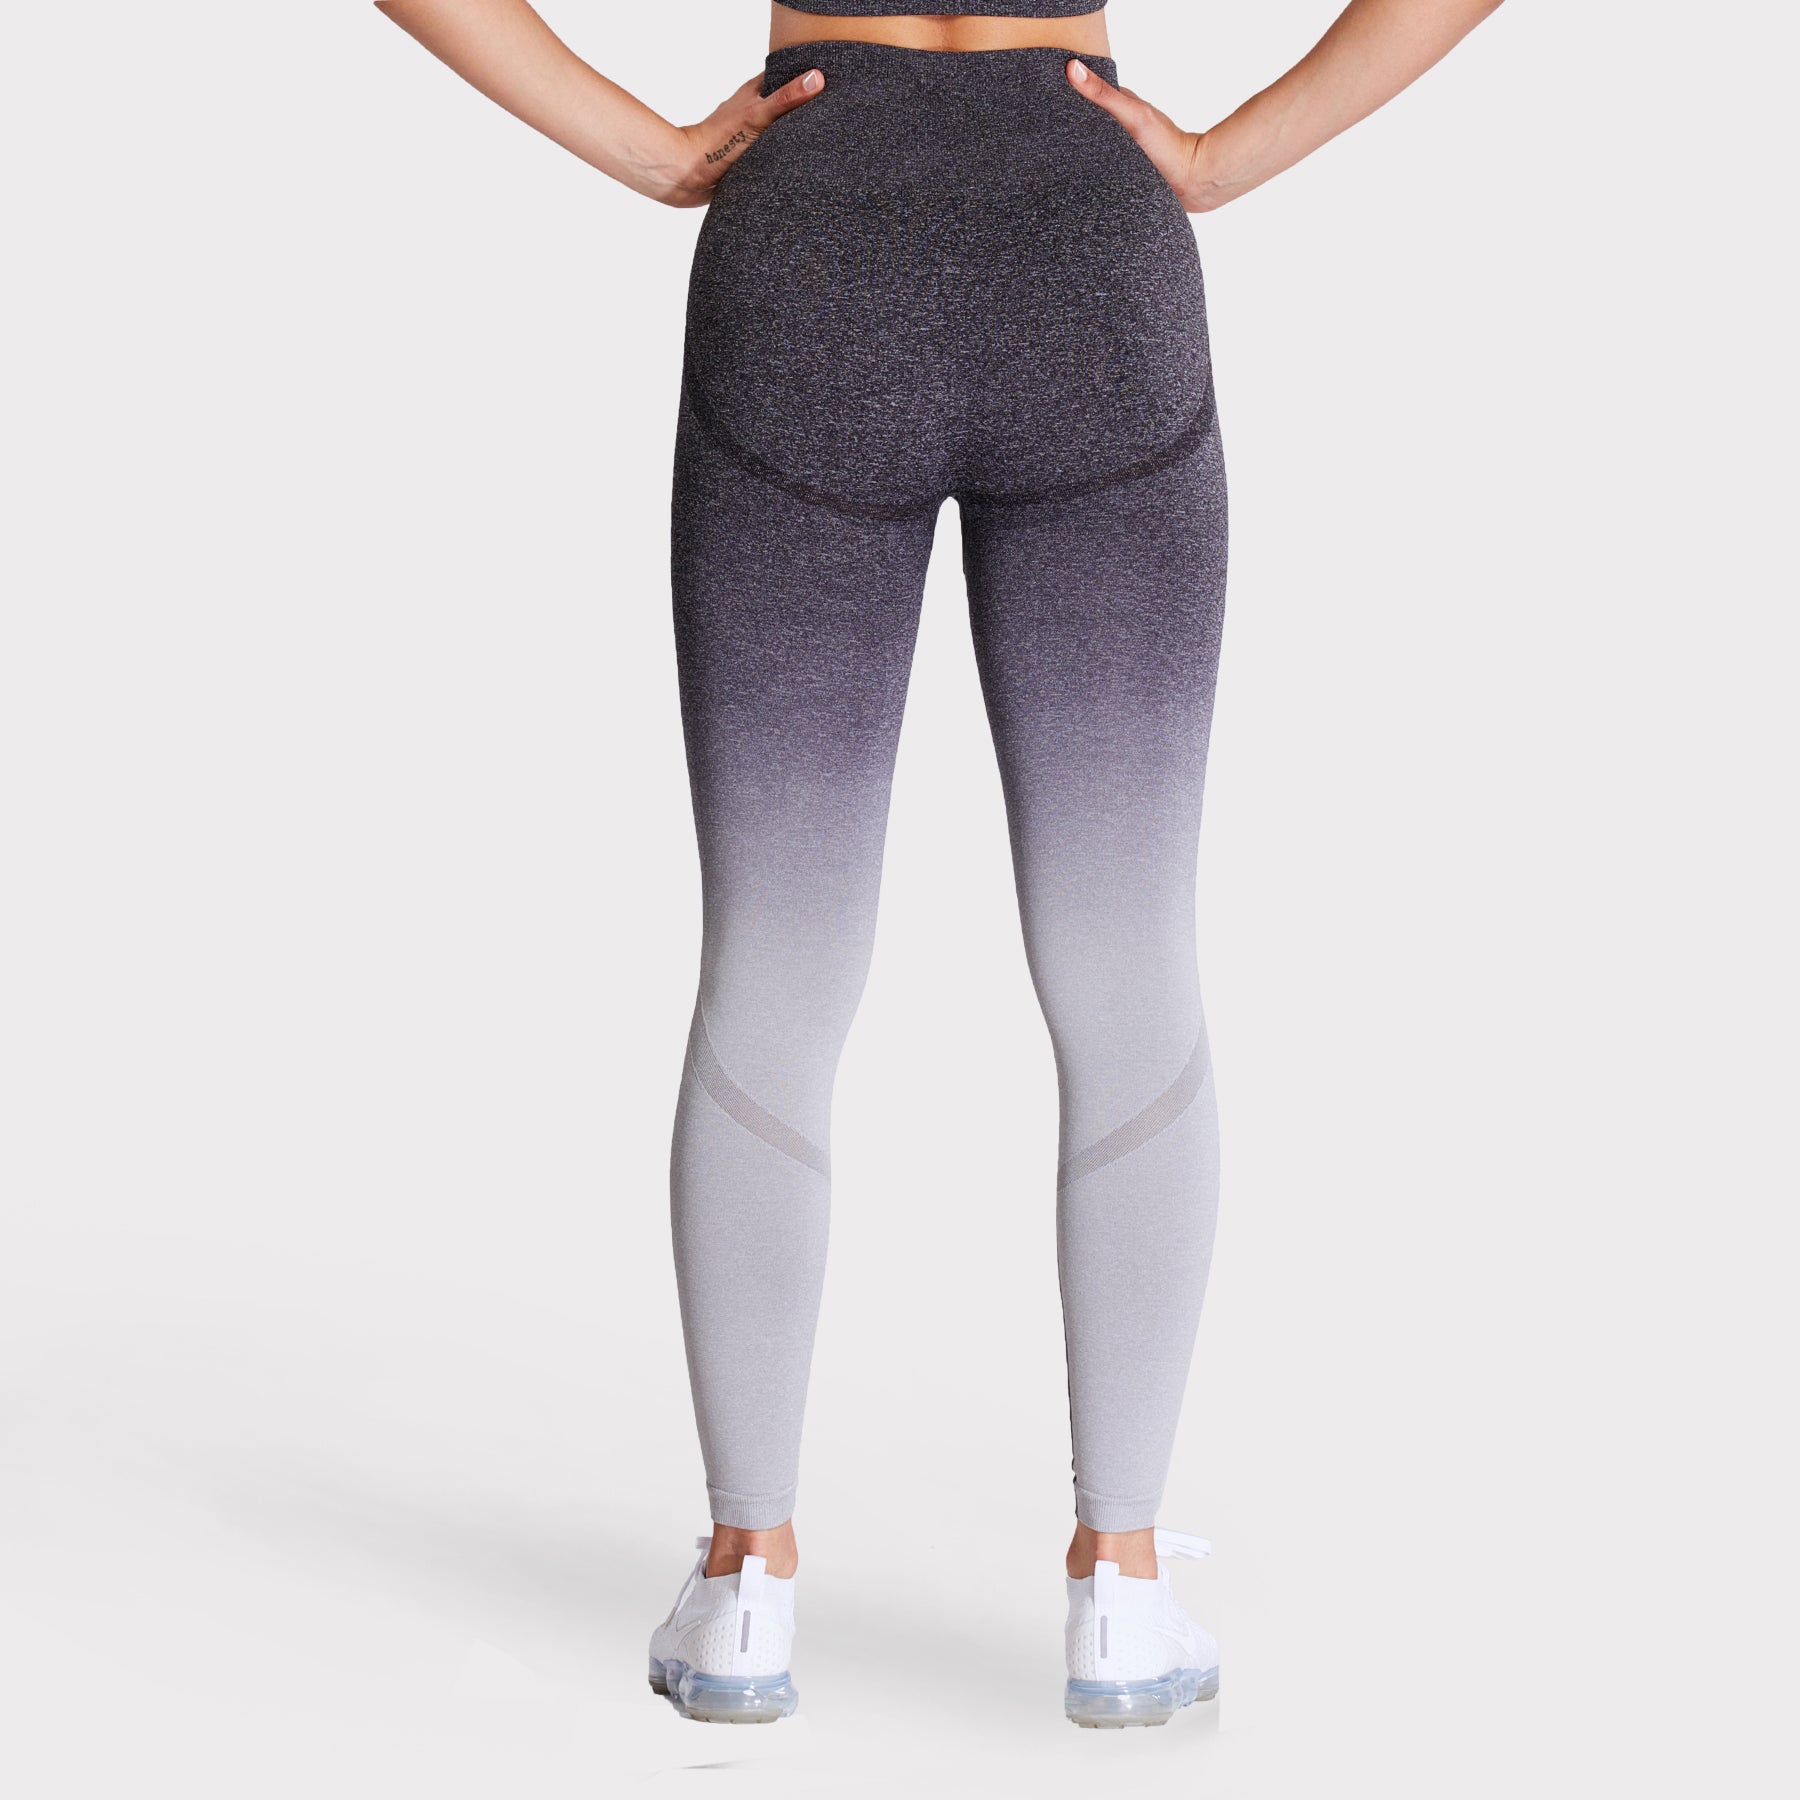 Aoxjox Seamless Legging for Women Carbon Tummy Control Workout Gym